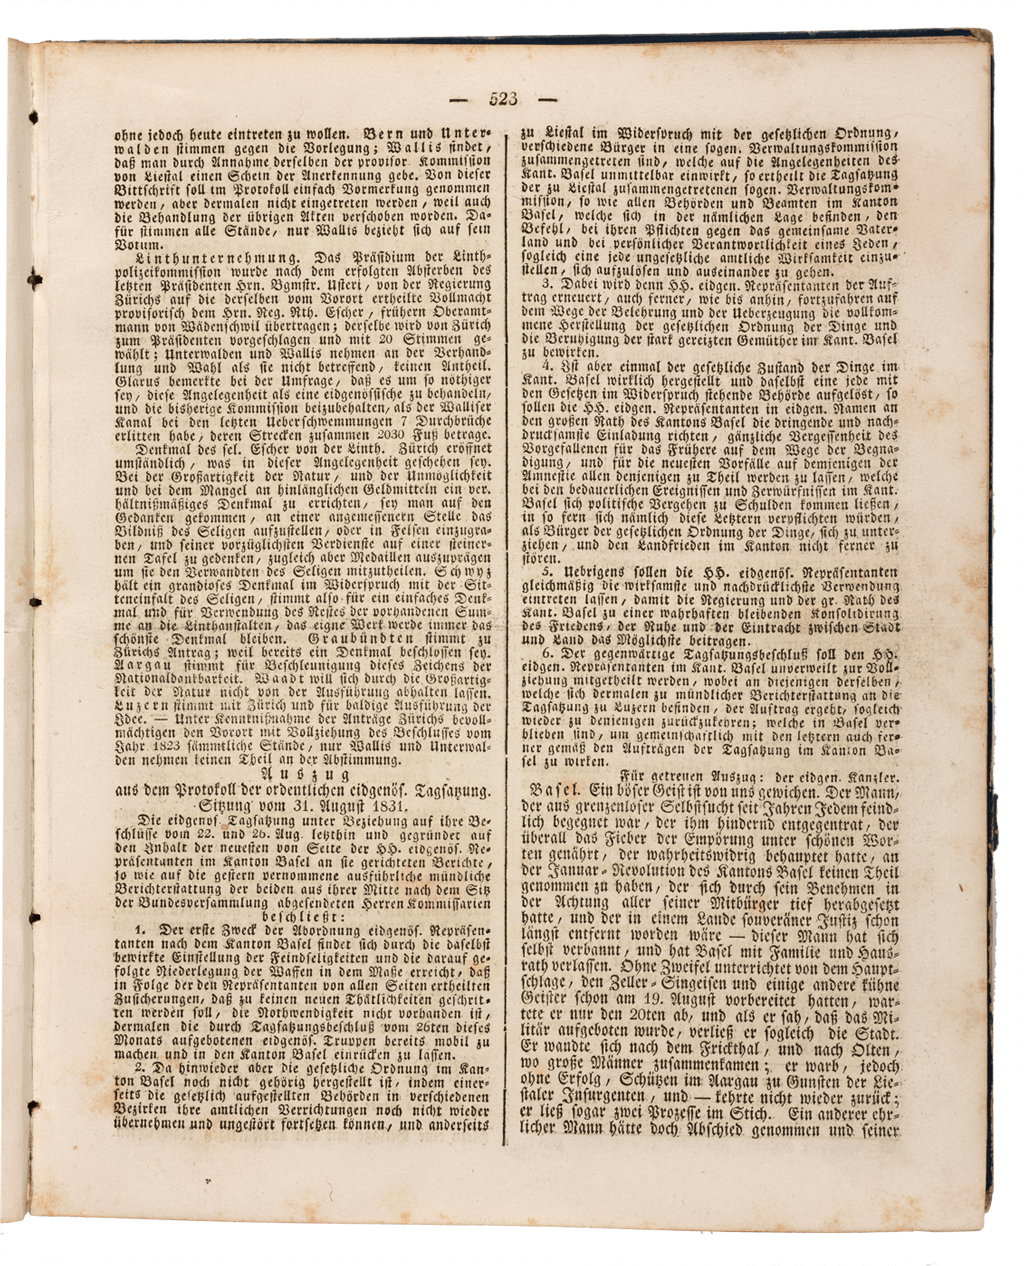 1831 Zeitungen 2 2 Sept 1831 2